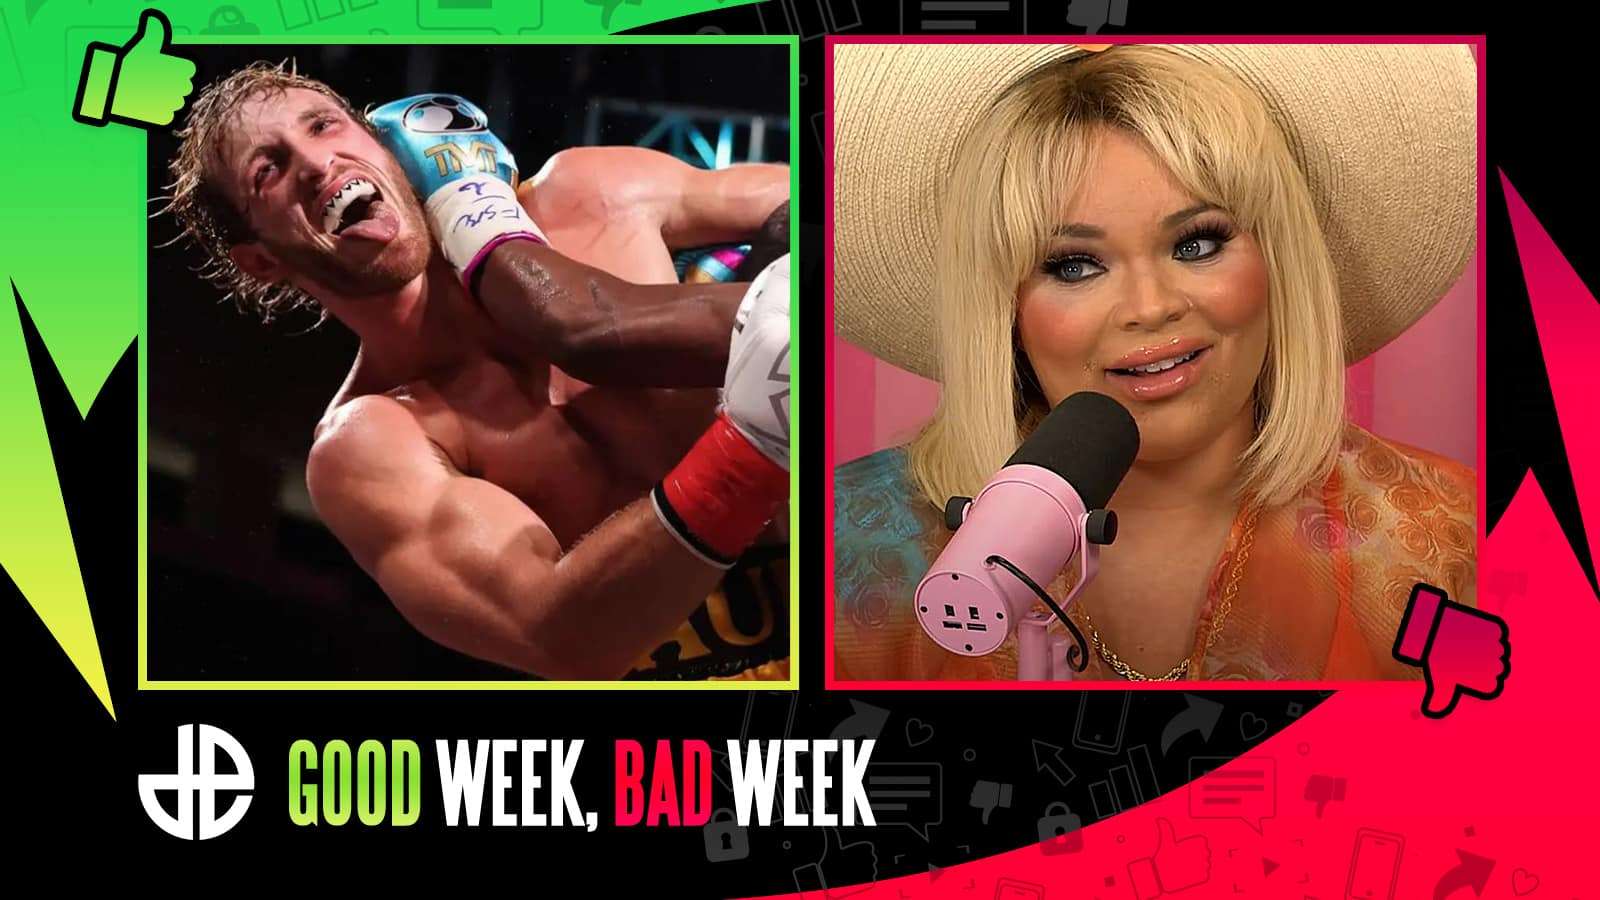 Logan Paul and Trisha Paytas in Good Week, Bad Week template